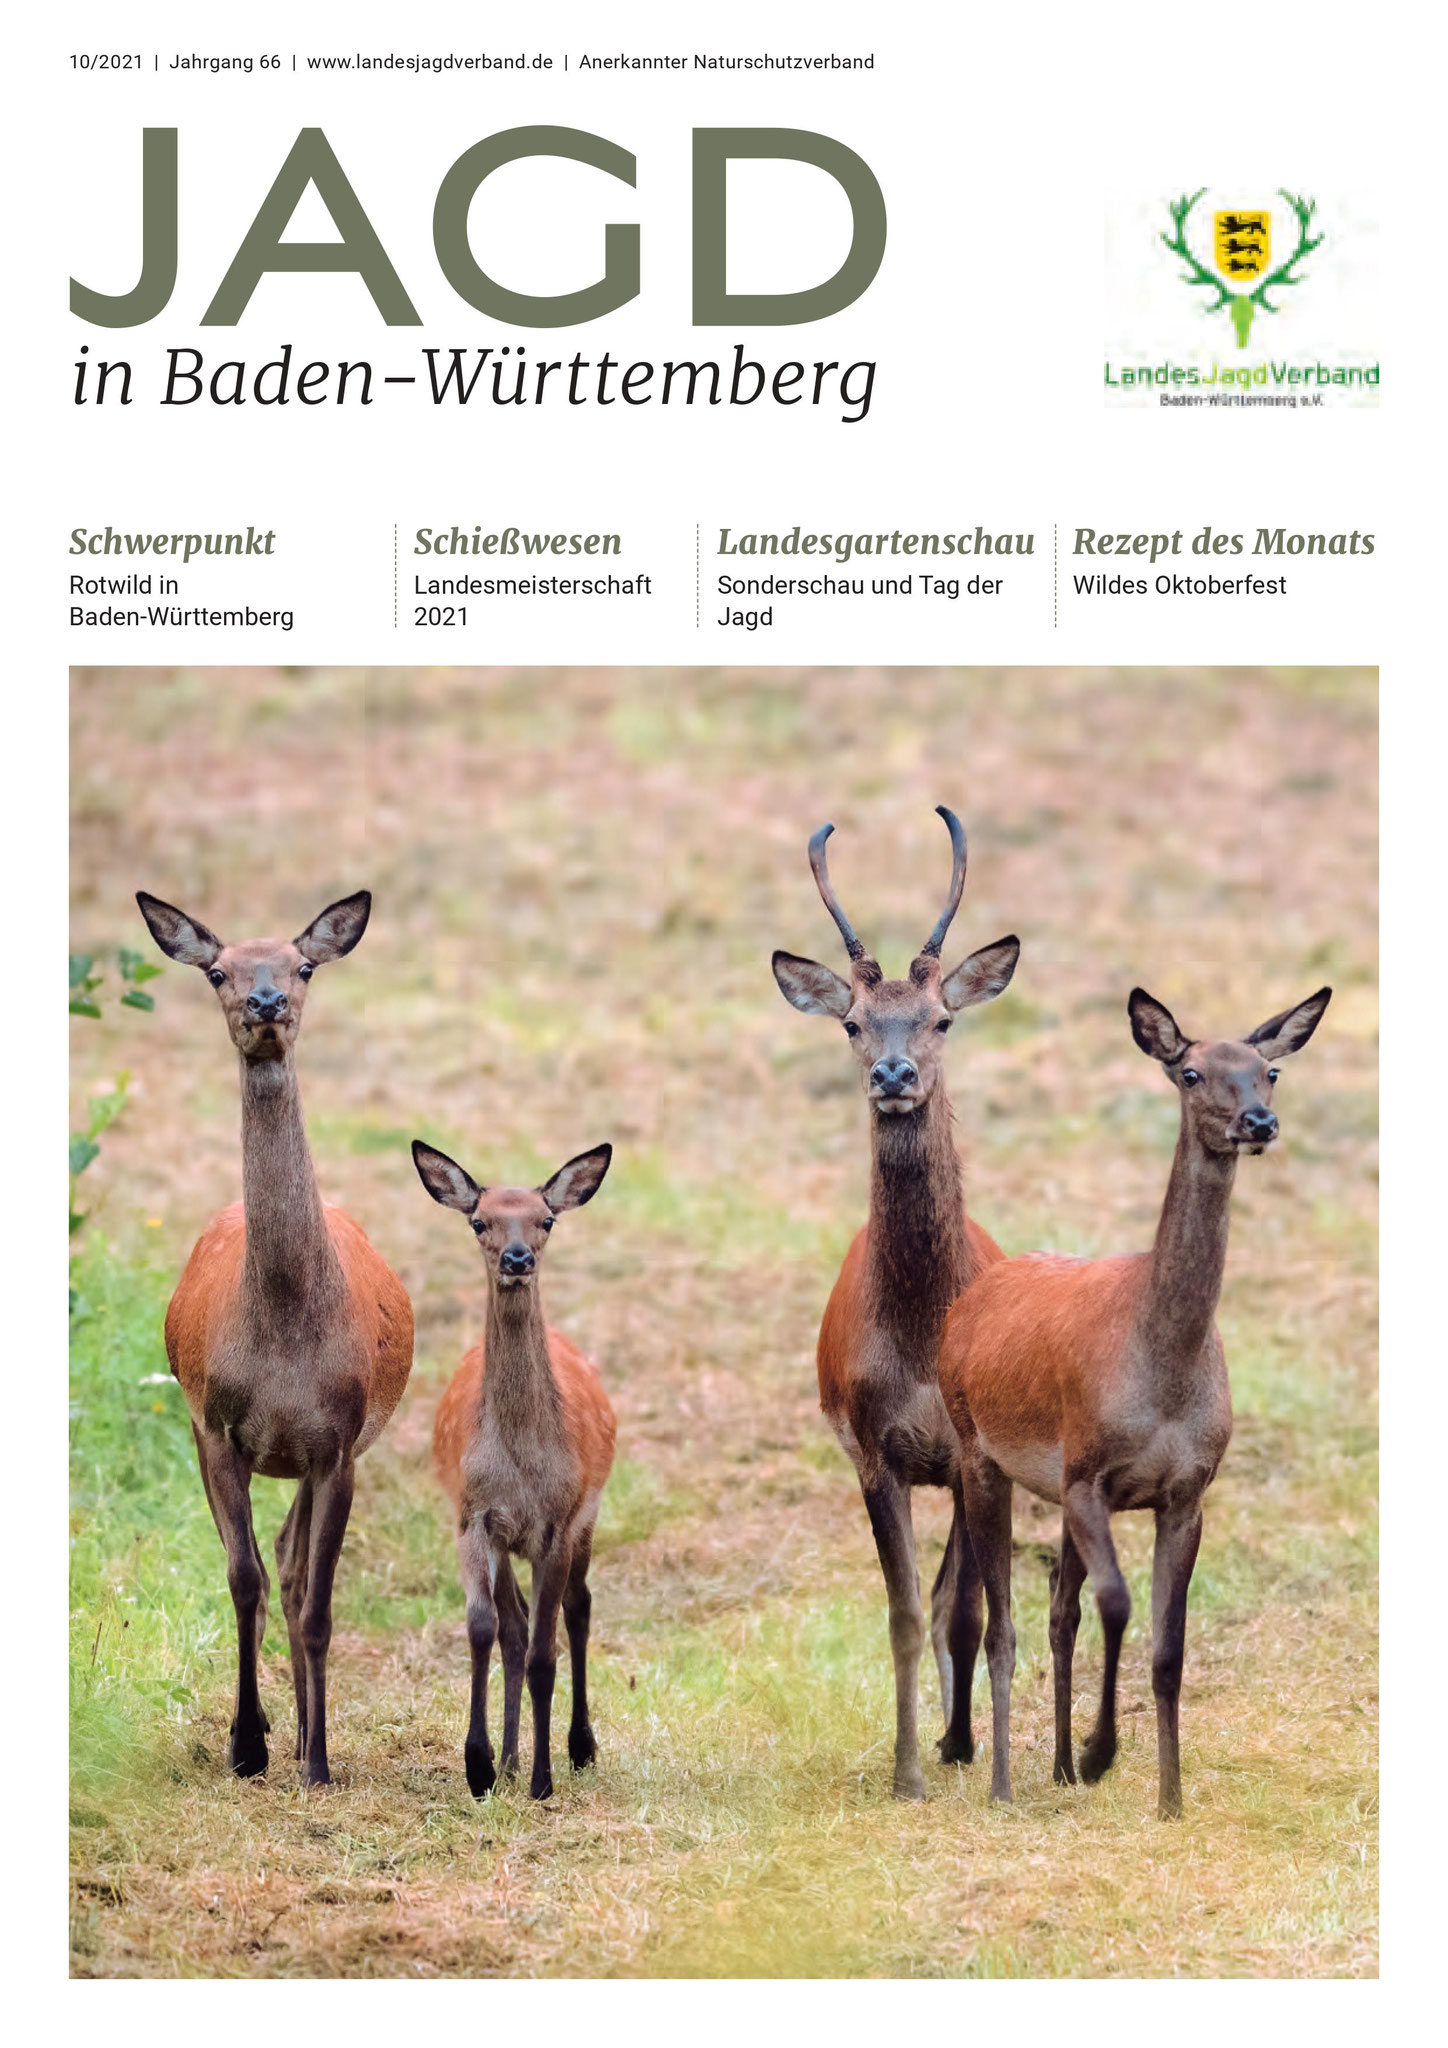 Titelseite der Jagd in Baden-Württemberg Nr. 10/2021